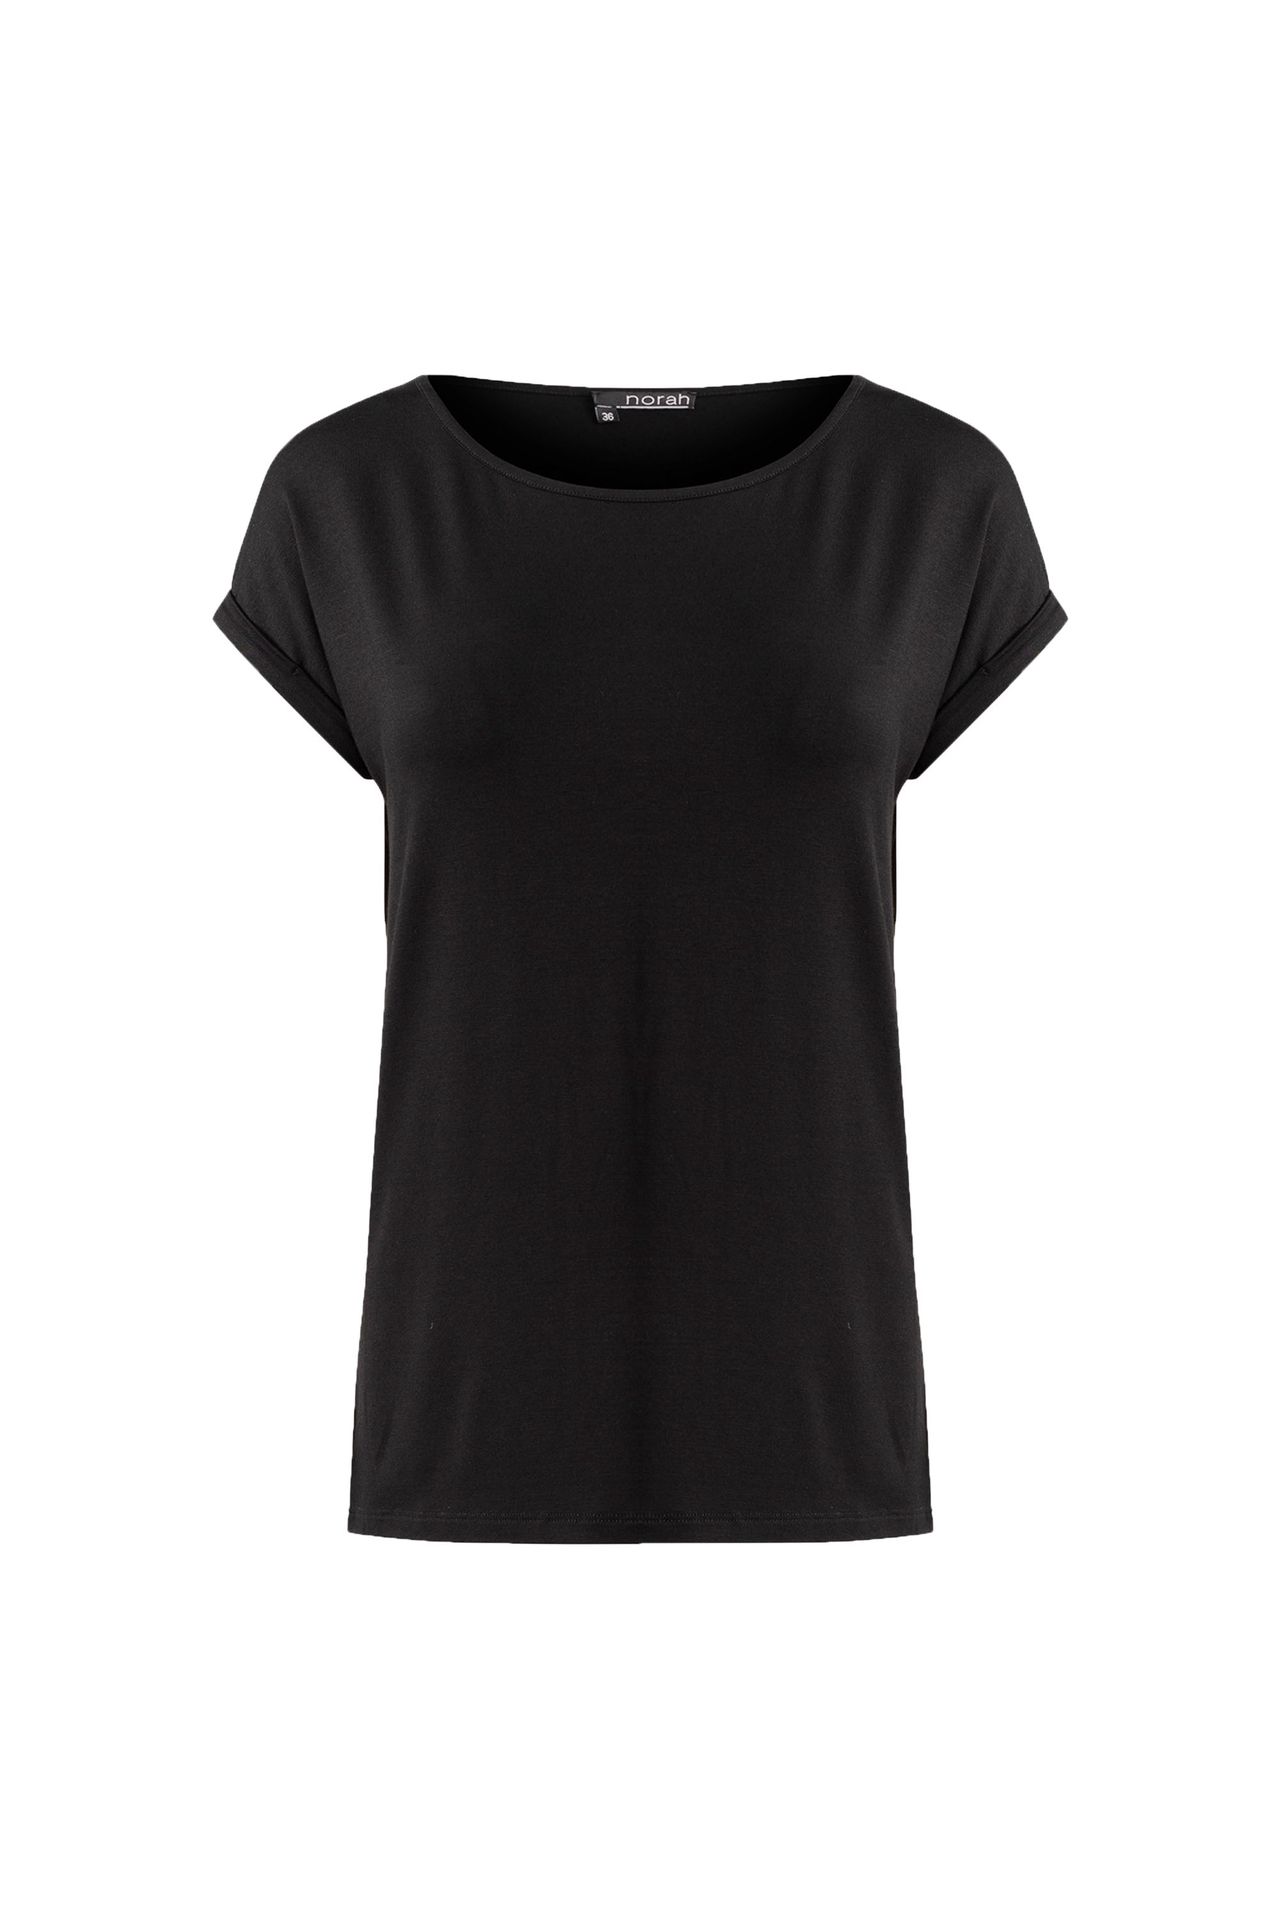 Norah Zwart shirt black 210075-001